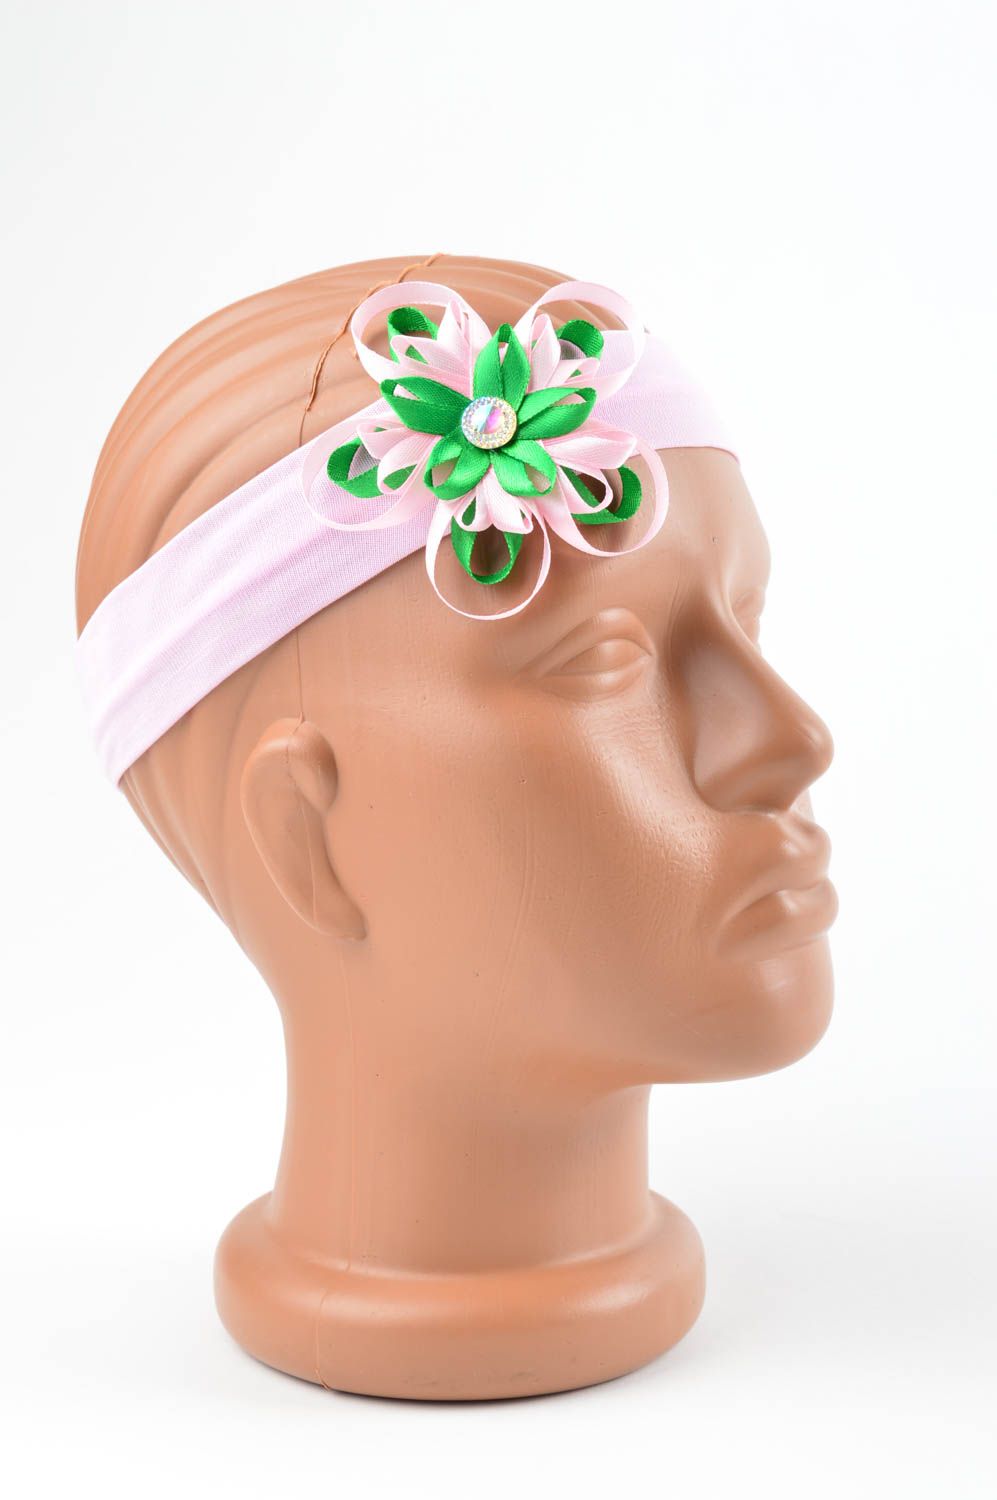 Повязка на голову хэнд мэйд розовая повязка для девочки детская повязка цветок фото 1